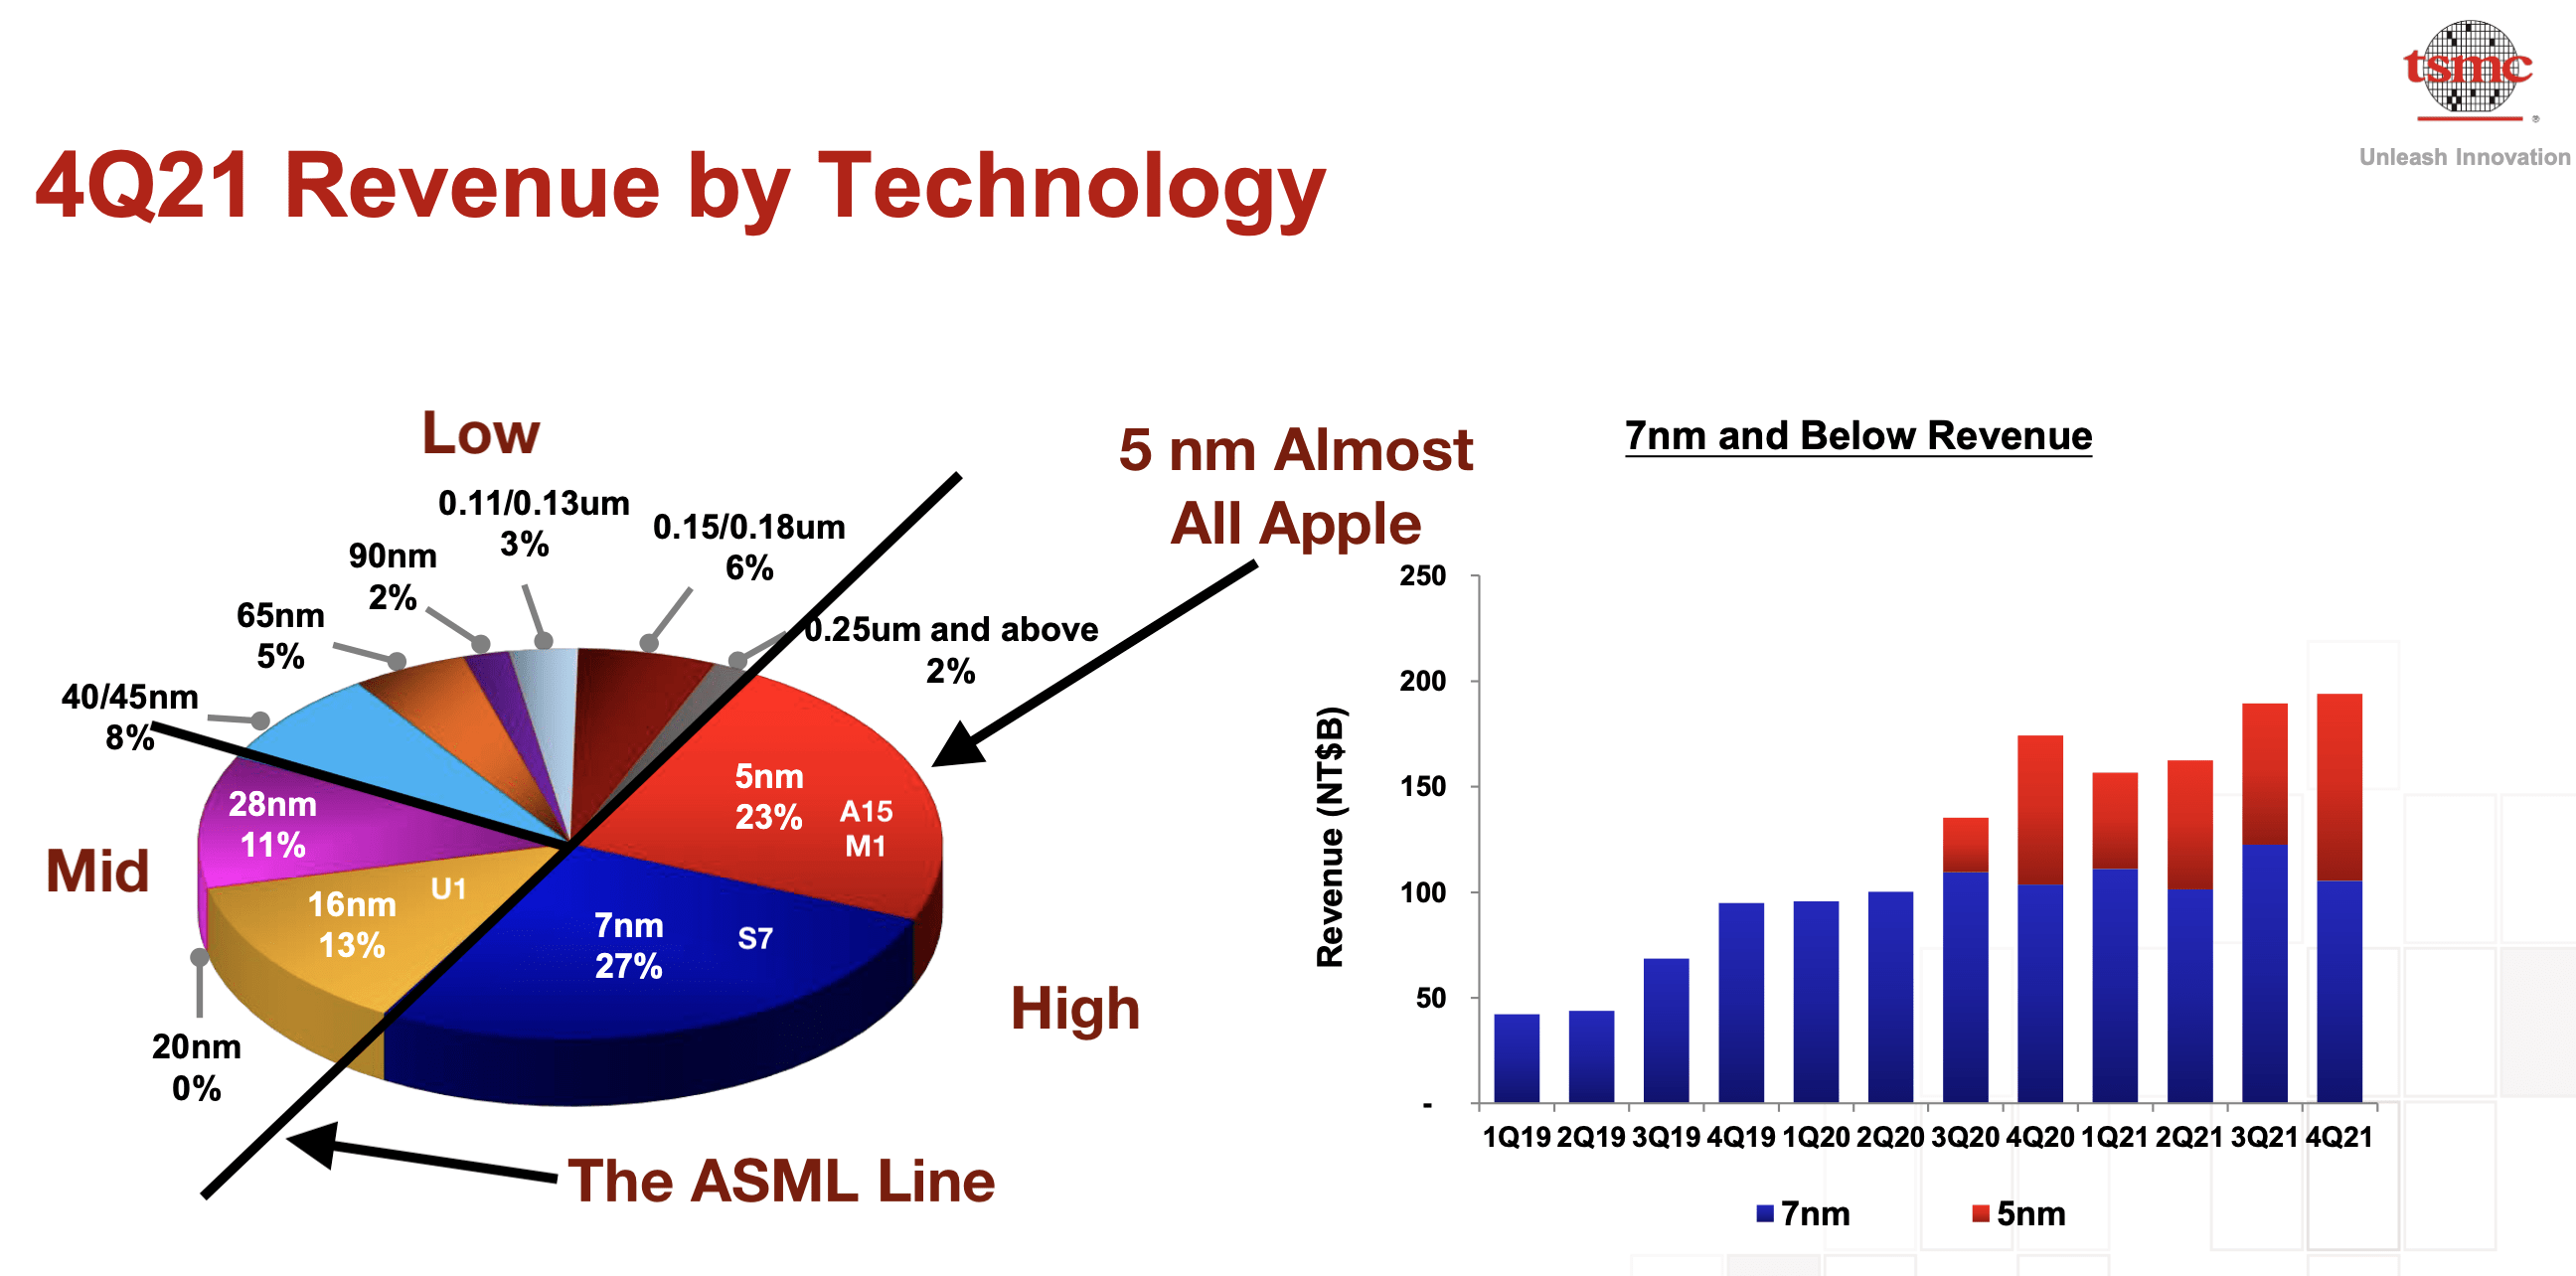 TSM manufacturing nodes by revenue